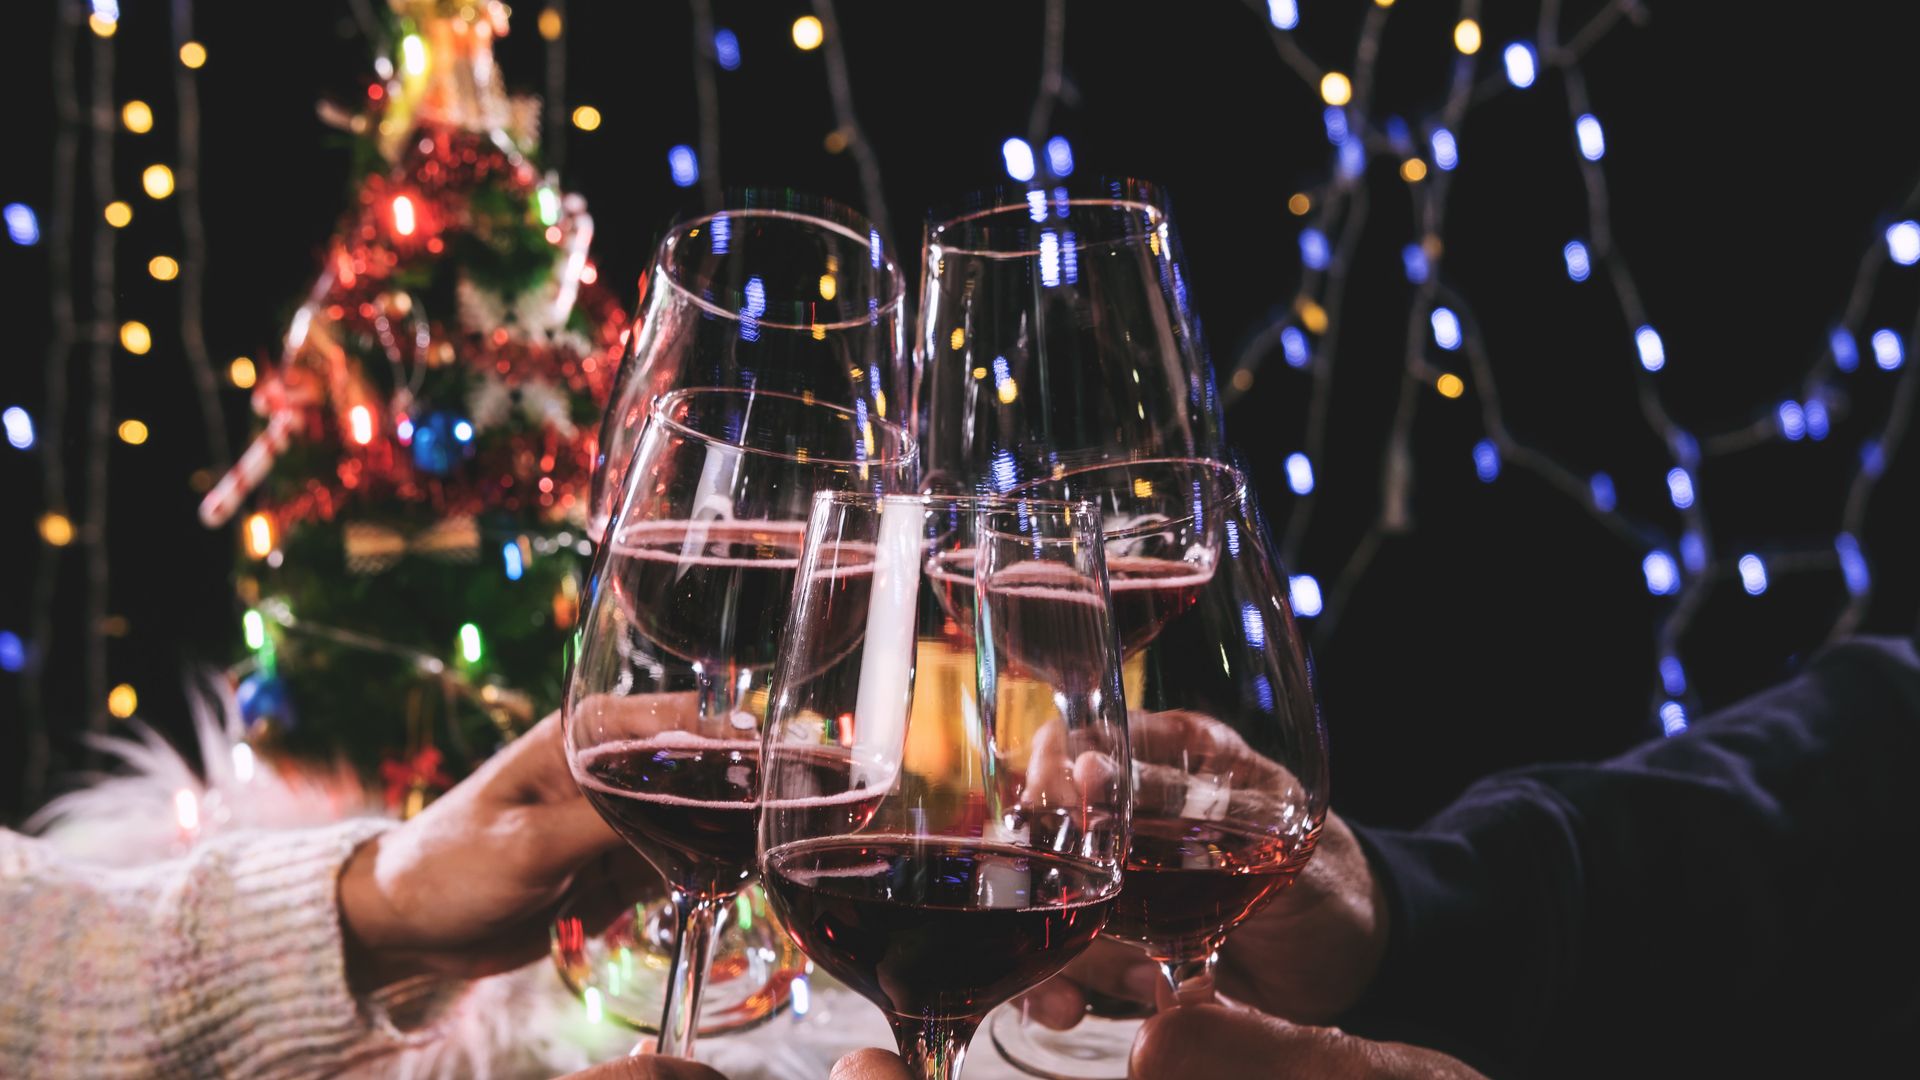 Wine advent calendar